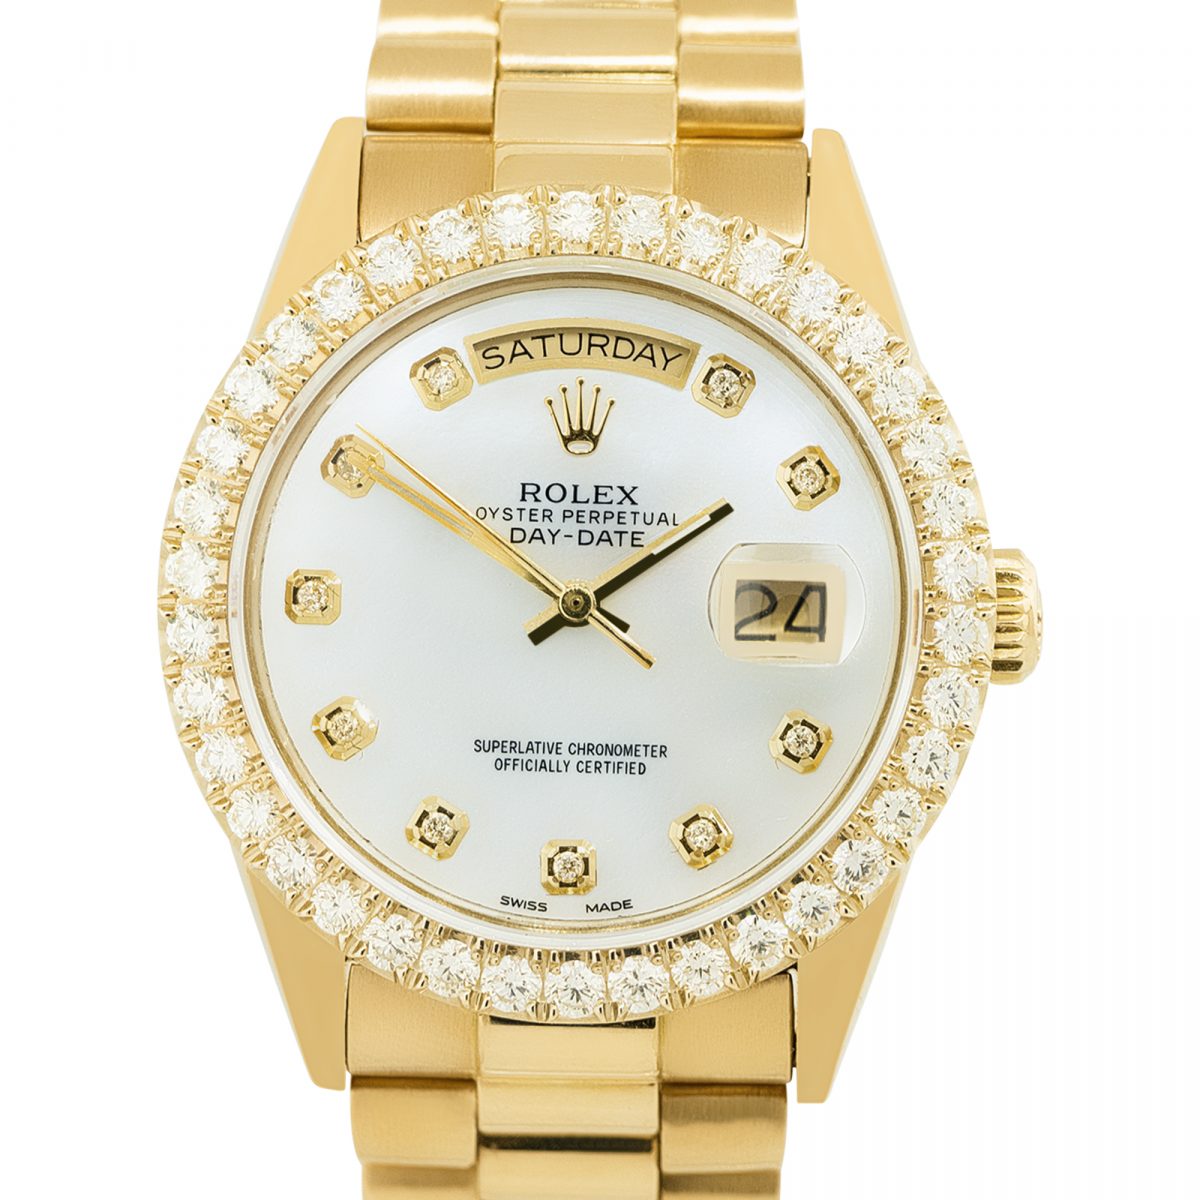 Rolex 18038 President 18k Yellow Gold Diamond Dial Watch